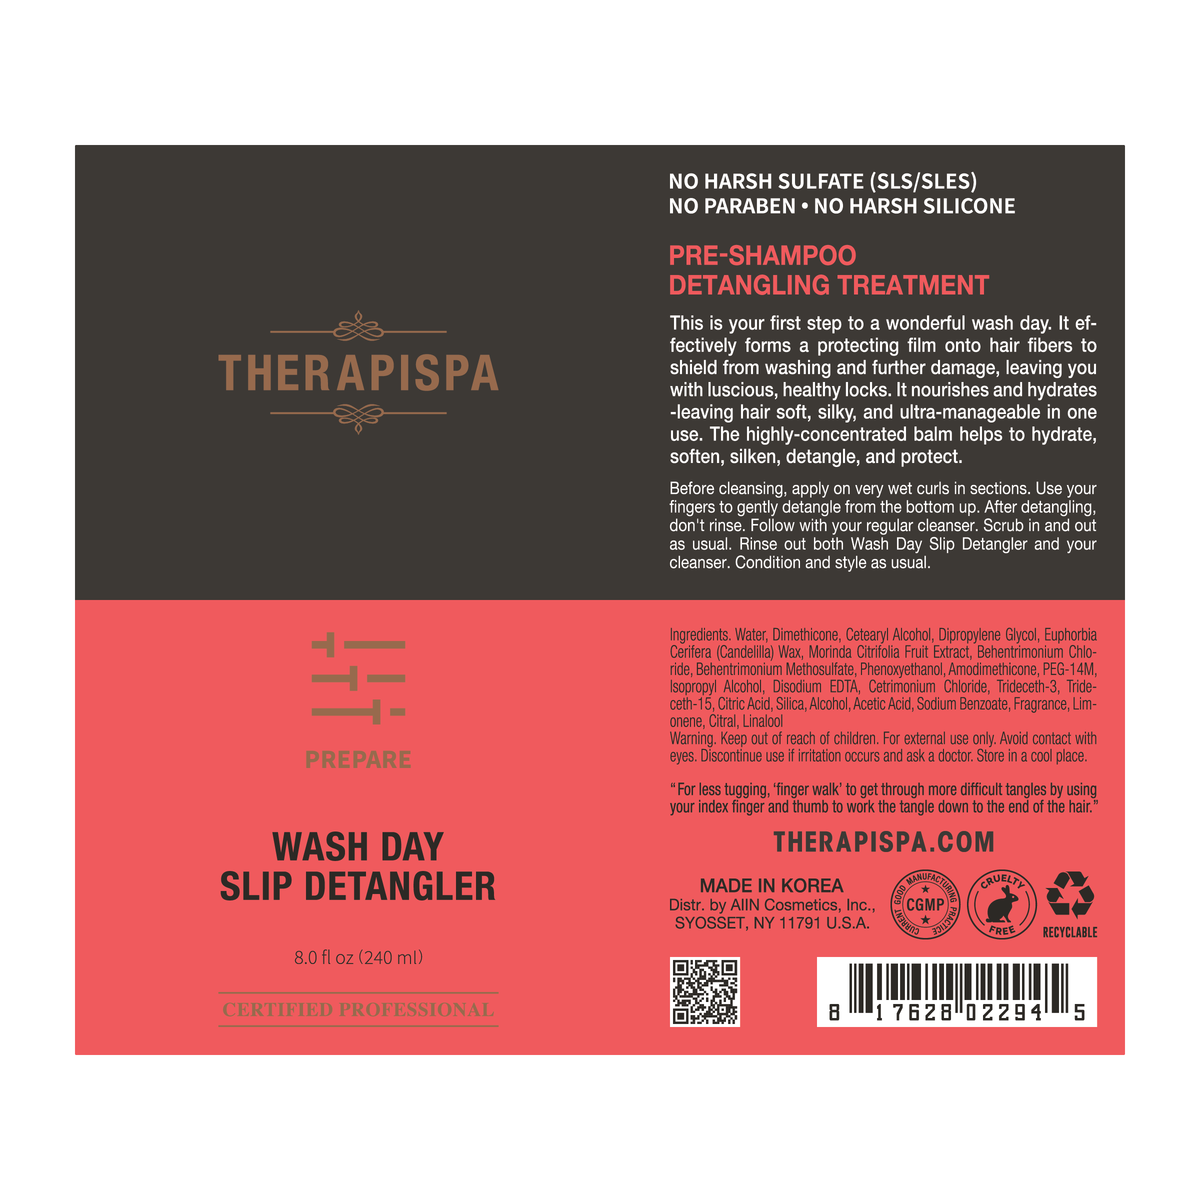 Wash Day Slip Detangler / Pre-Shampoo Detangling Treatment